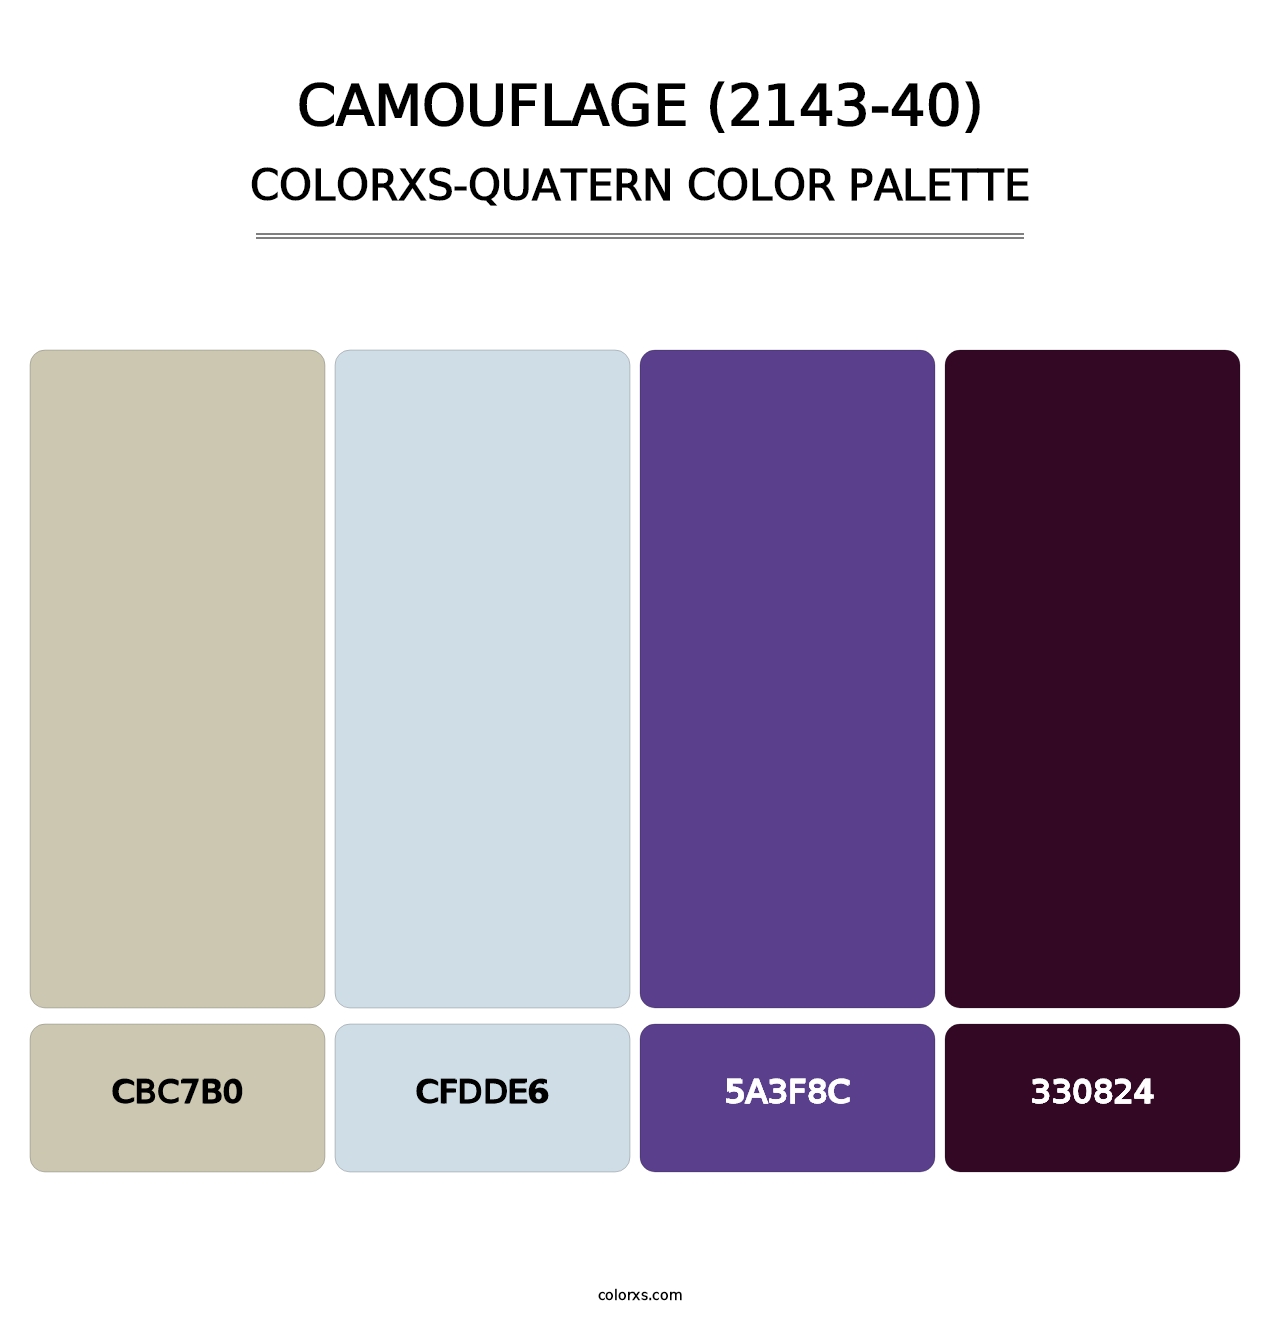 Camouflage (2143-40) - Colorxs Quatern Palette